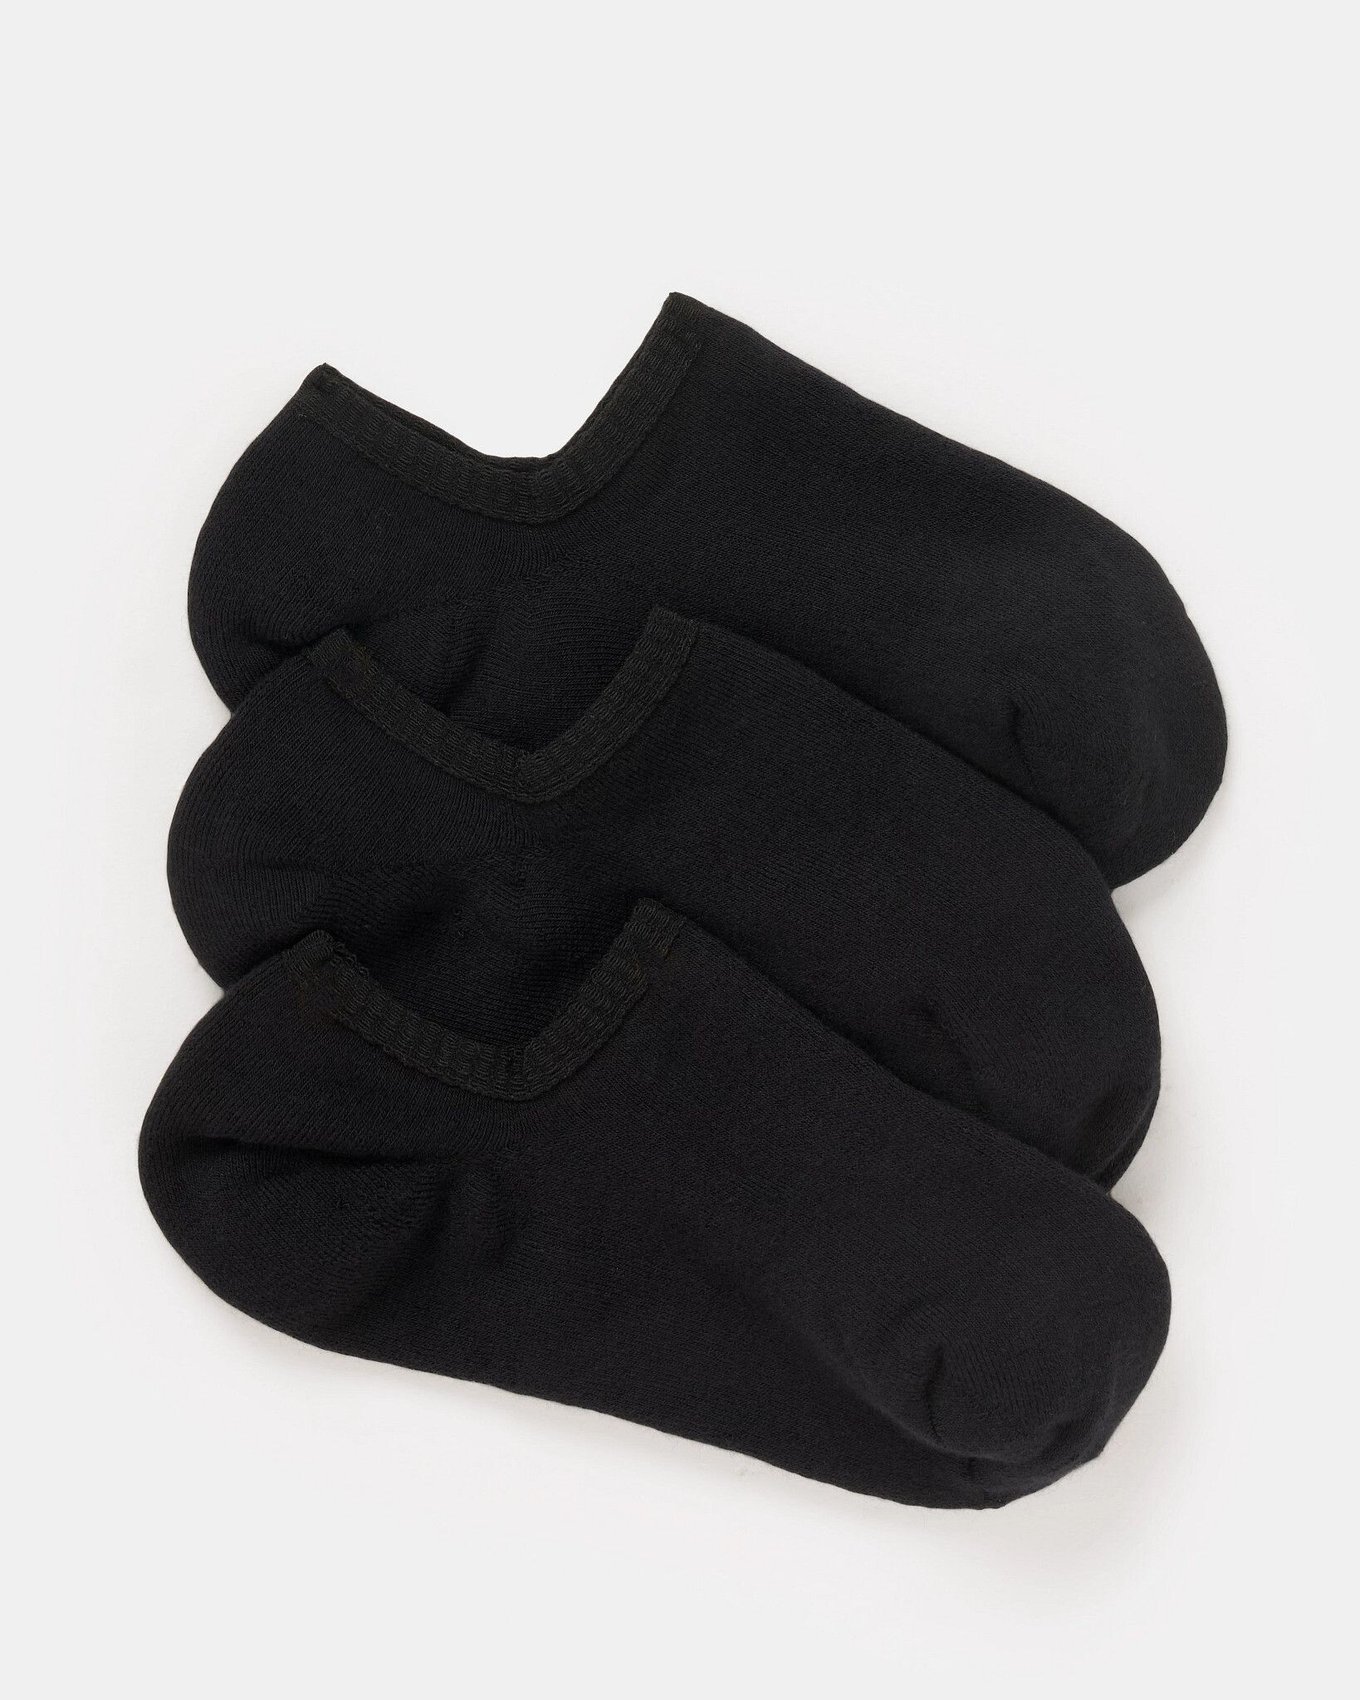 Clairey Black Mesh Socks